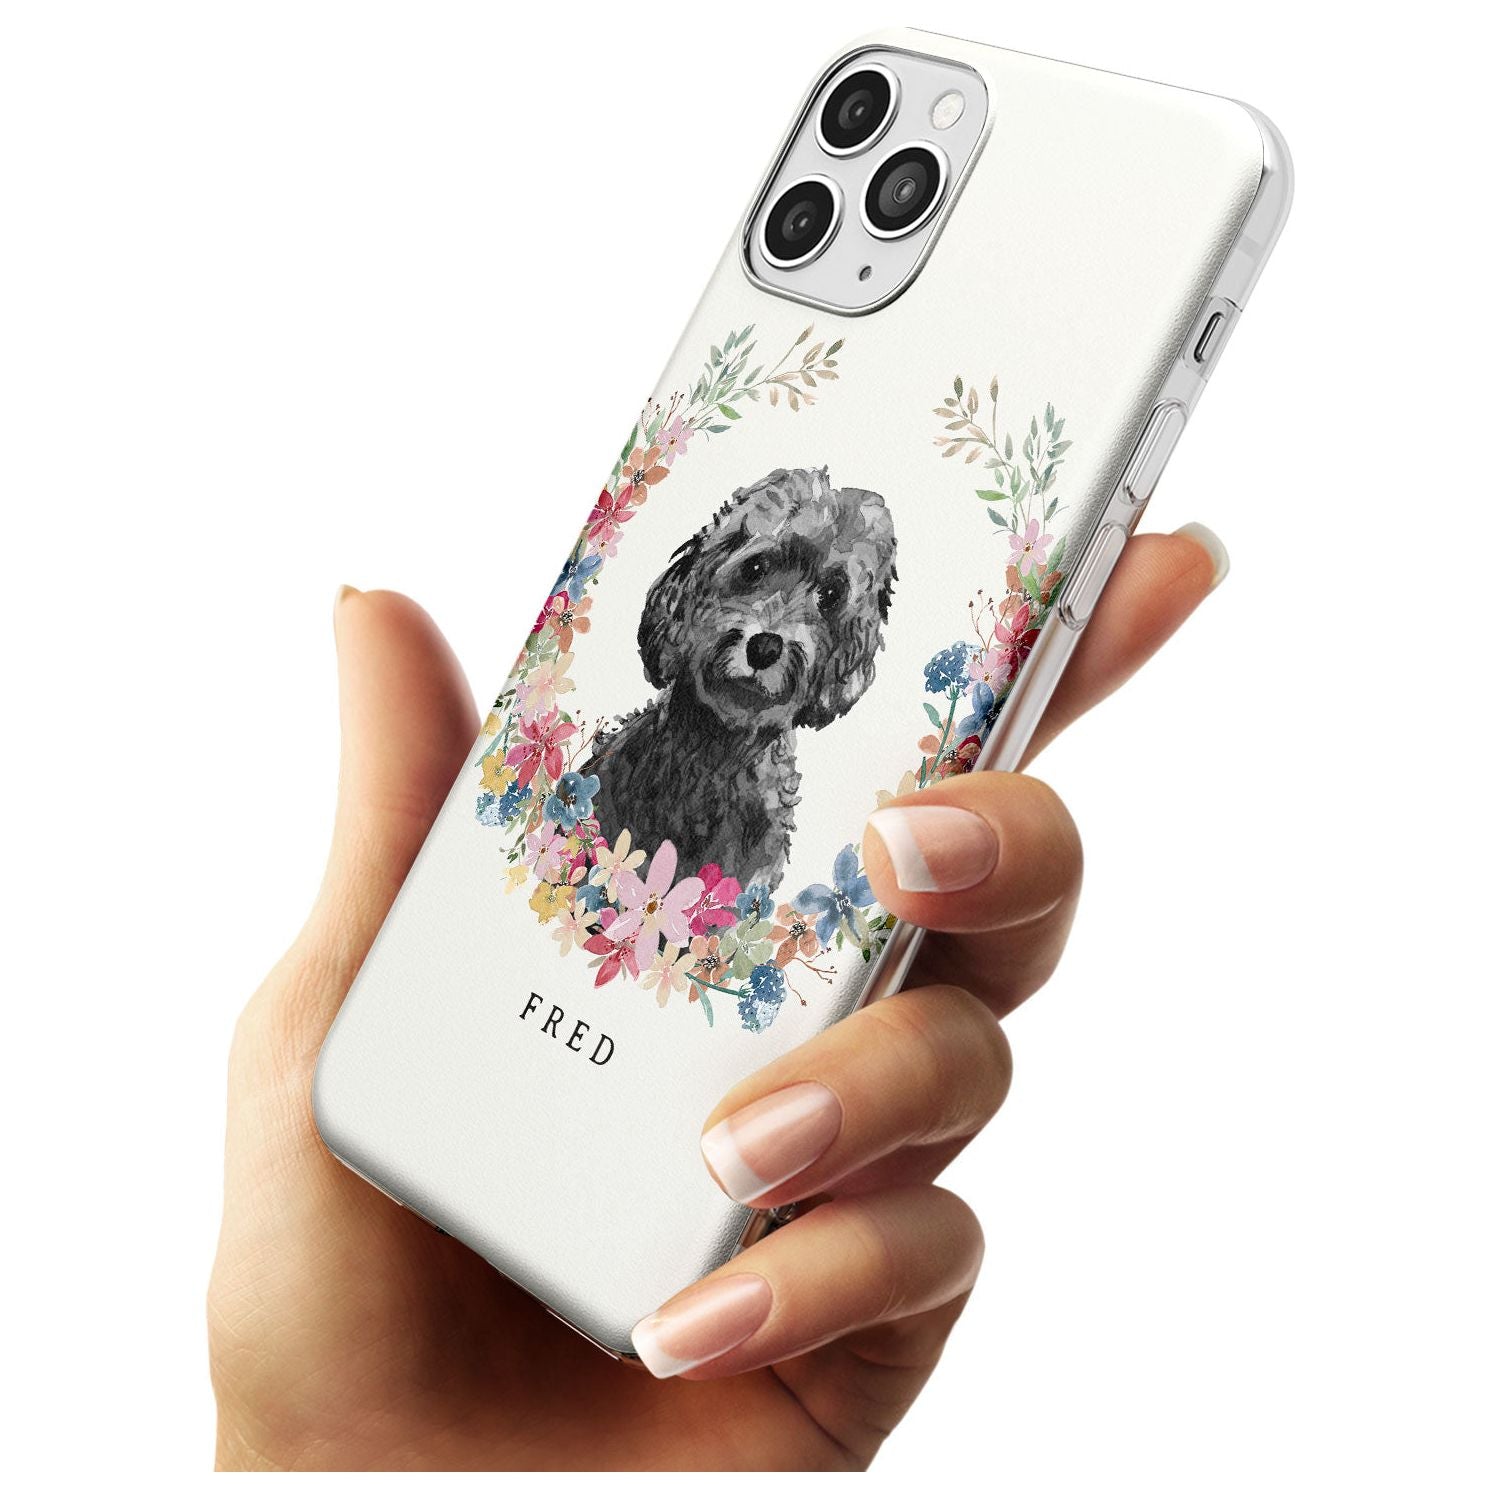 Black Cockapoo - Watercolour Dog Portrait Slim TPU Phone Case for iPhone 11 Pro Max